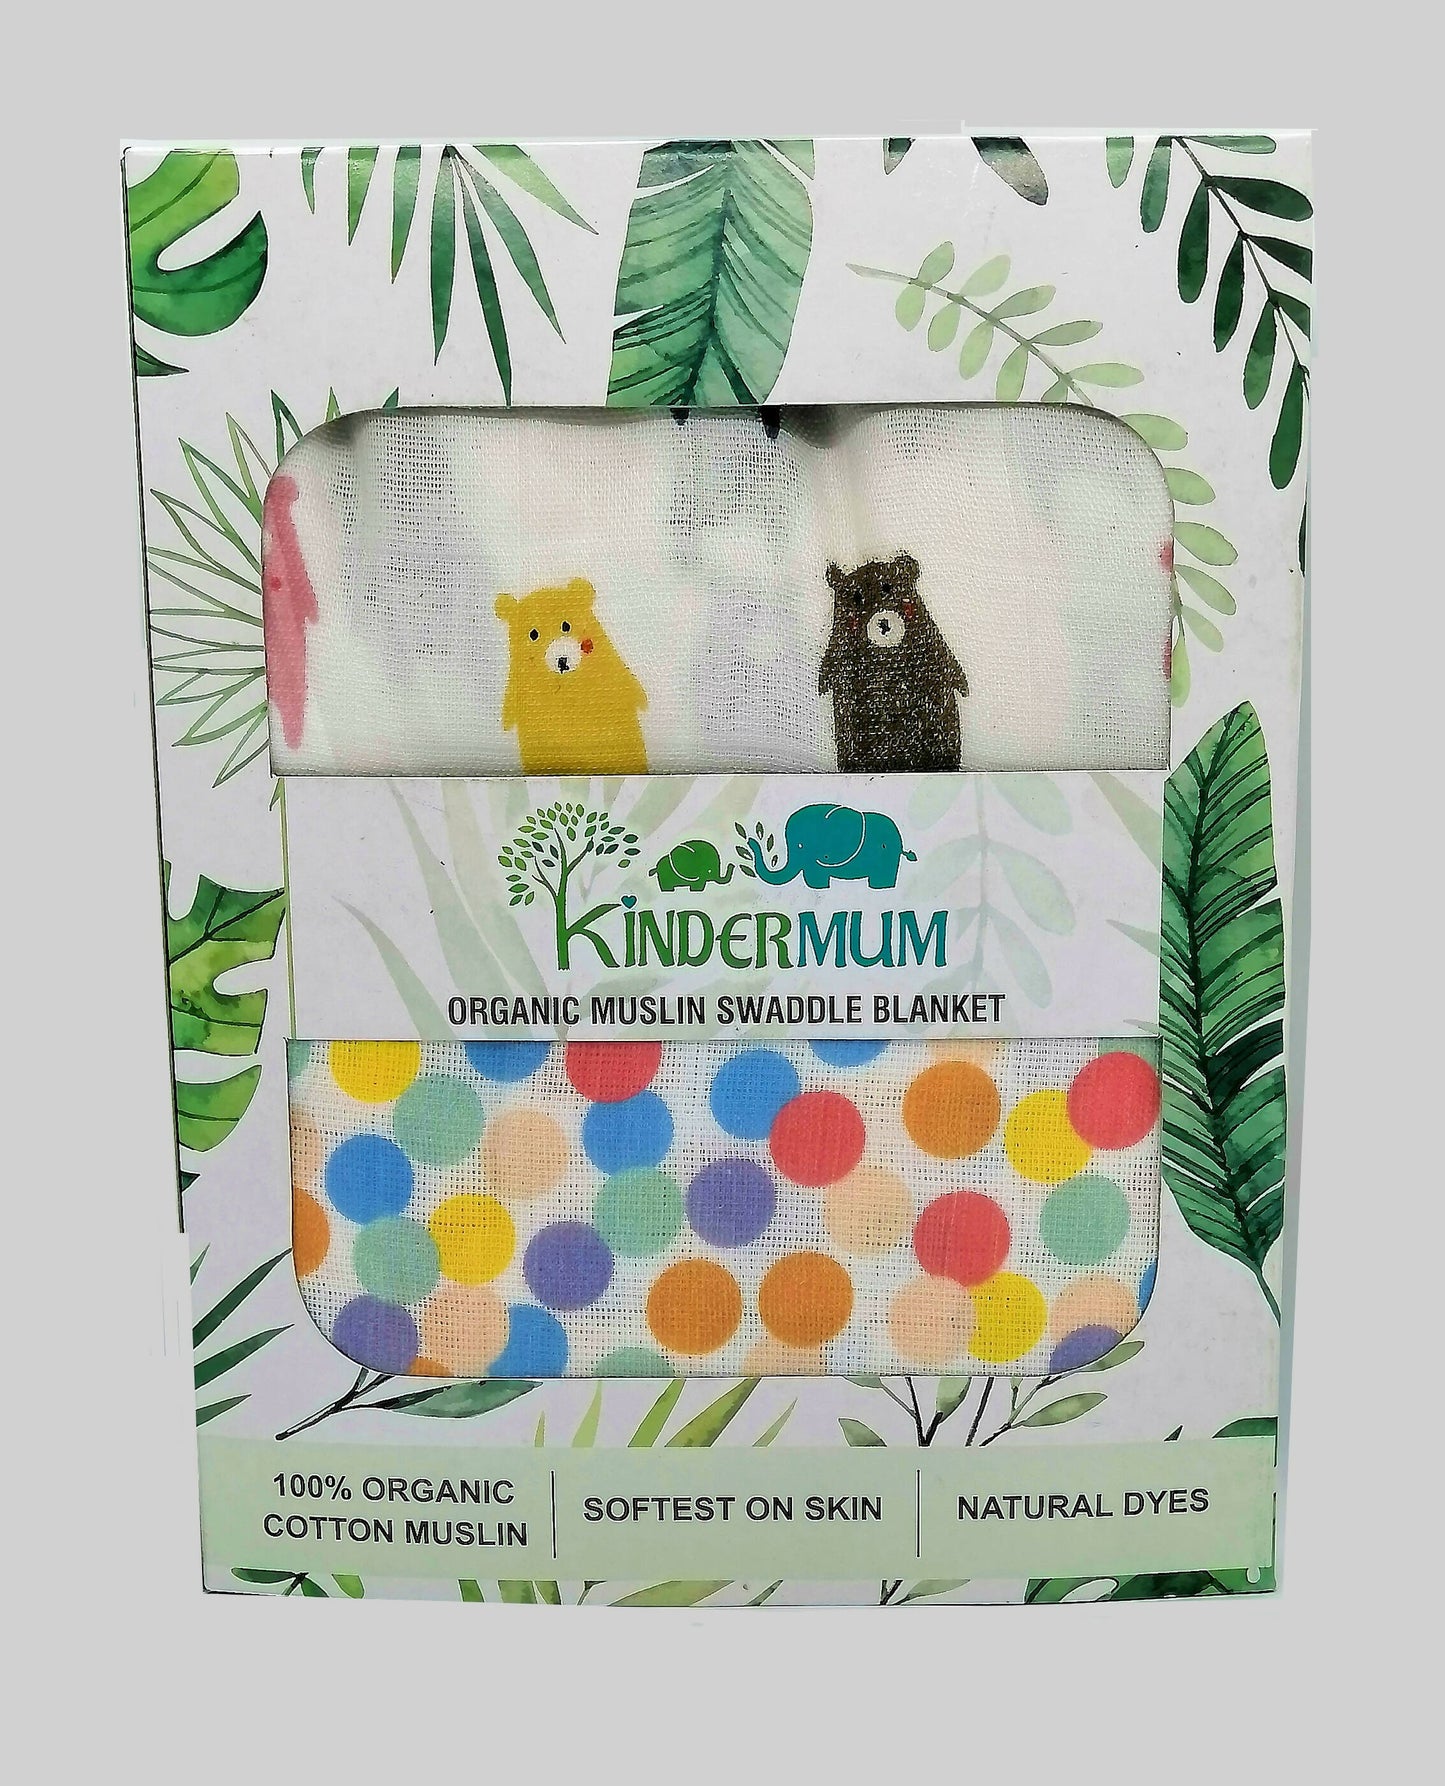 Kindermum Organic Cotton Muslin Swaddle Blanket 110 Cm X 110 Cm - Set Of 2 - Colorful Polka And Bear